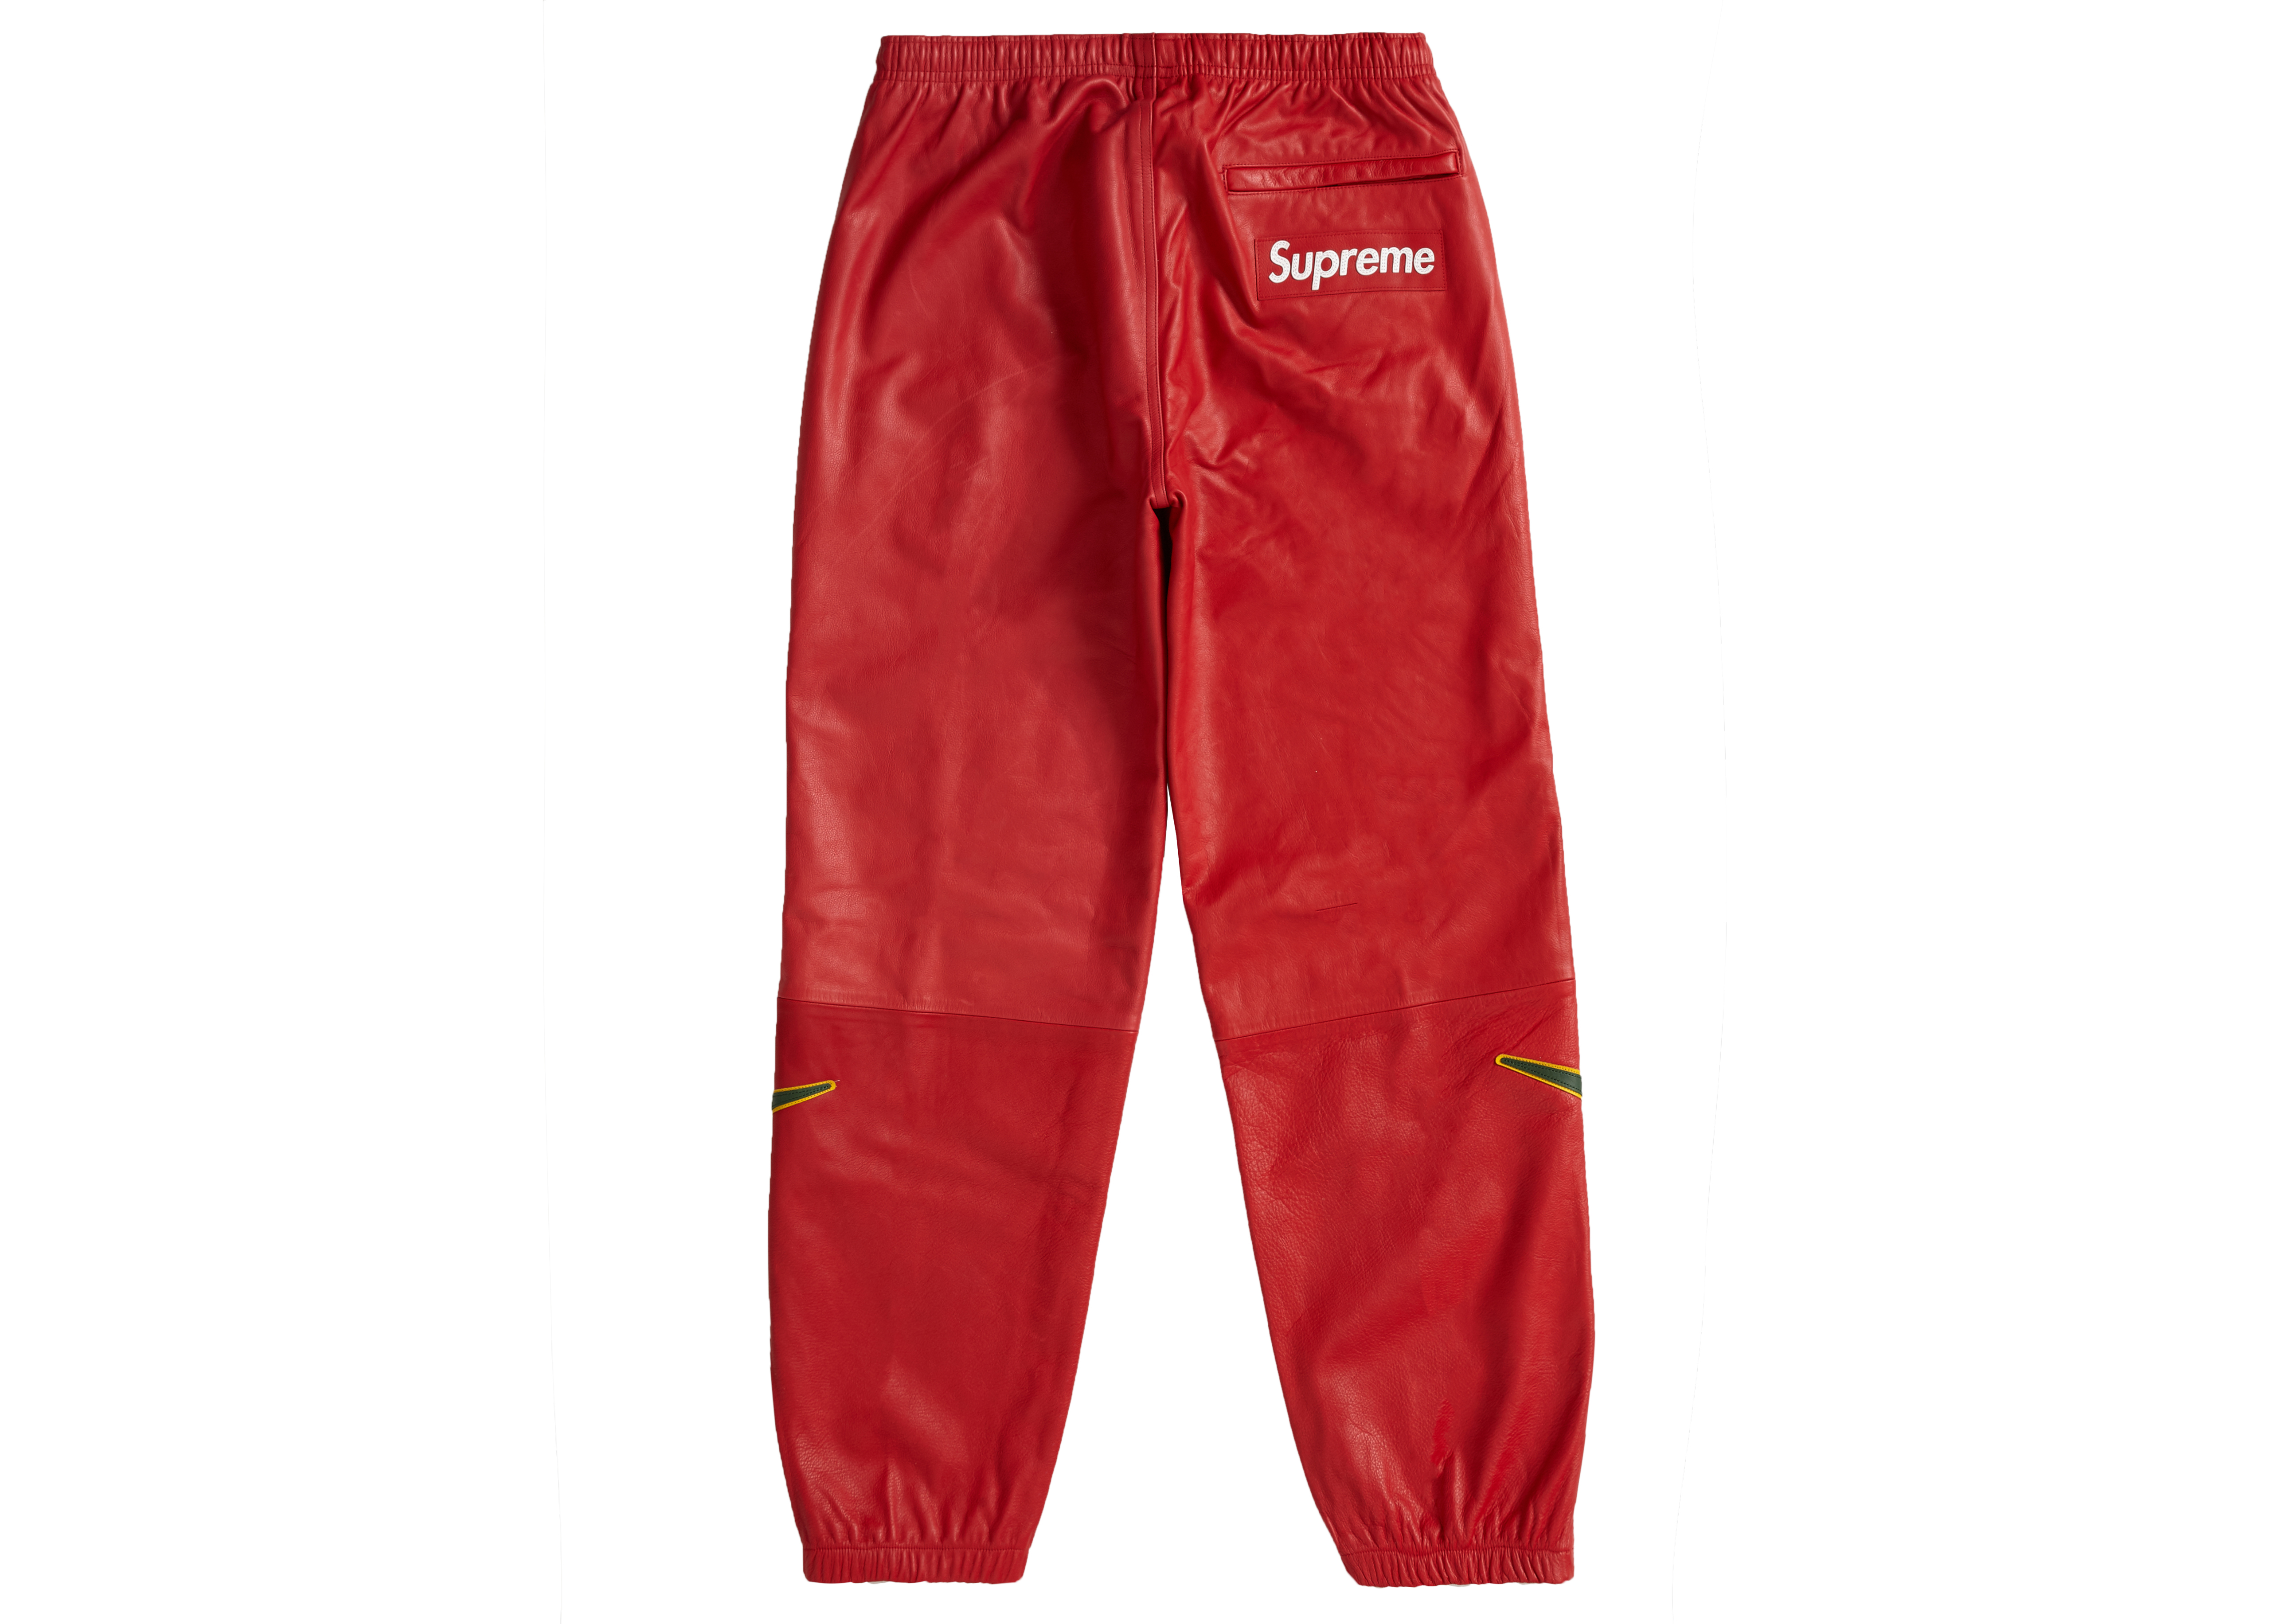 Supreme x Nike Leather Warm Up Pant Red - Novelship